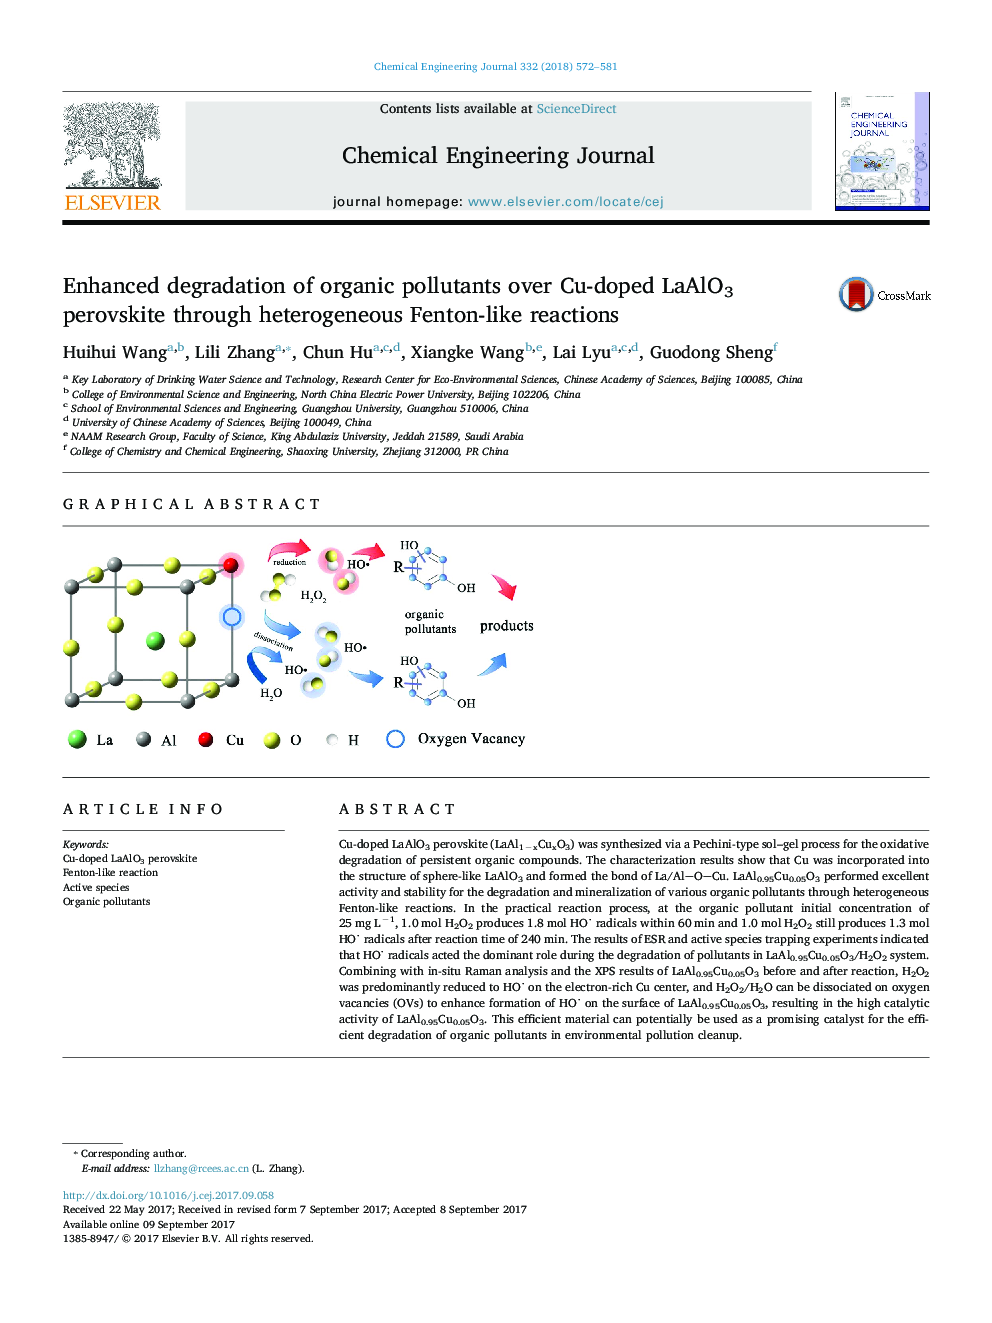 Enhanced degradation of organic pollutants over Cu-doped LaAlO3 perovskite through heterogeneous Fenton-like reactions